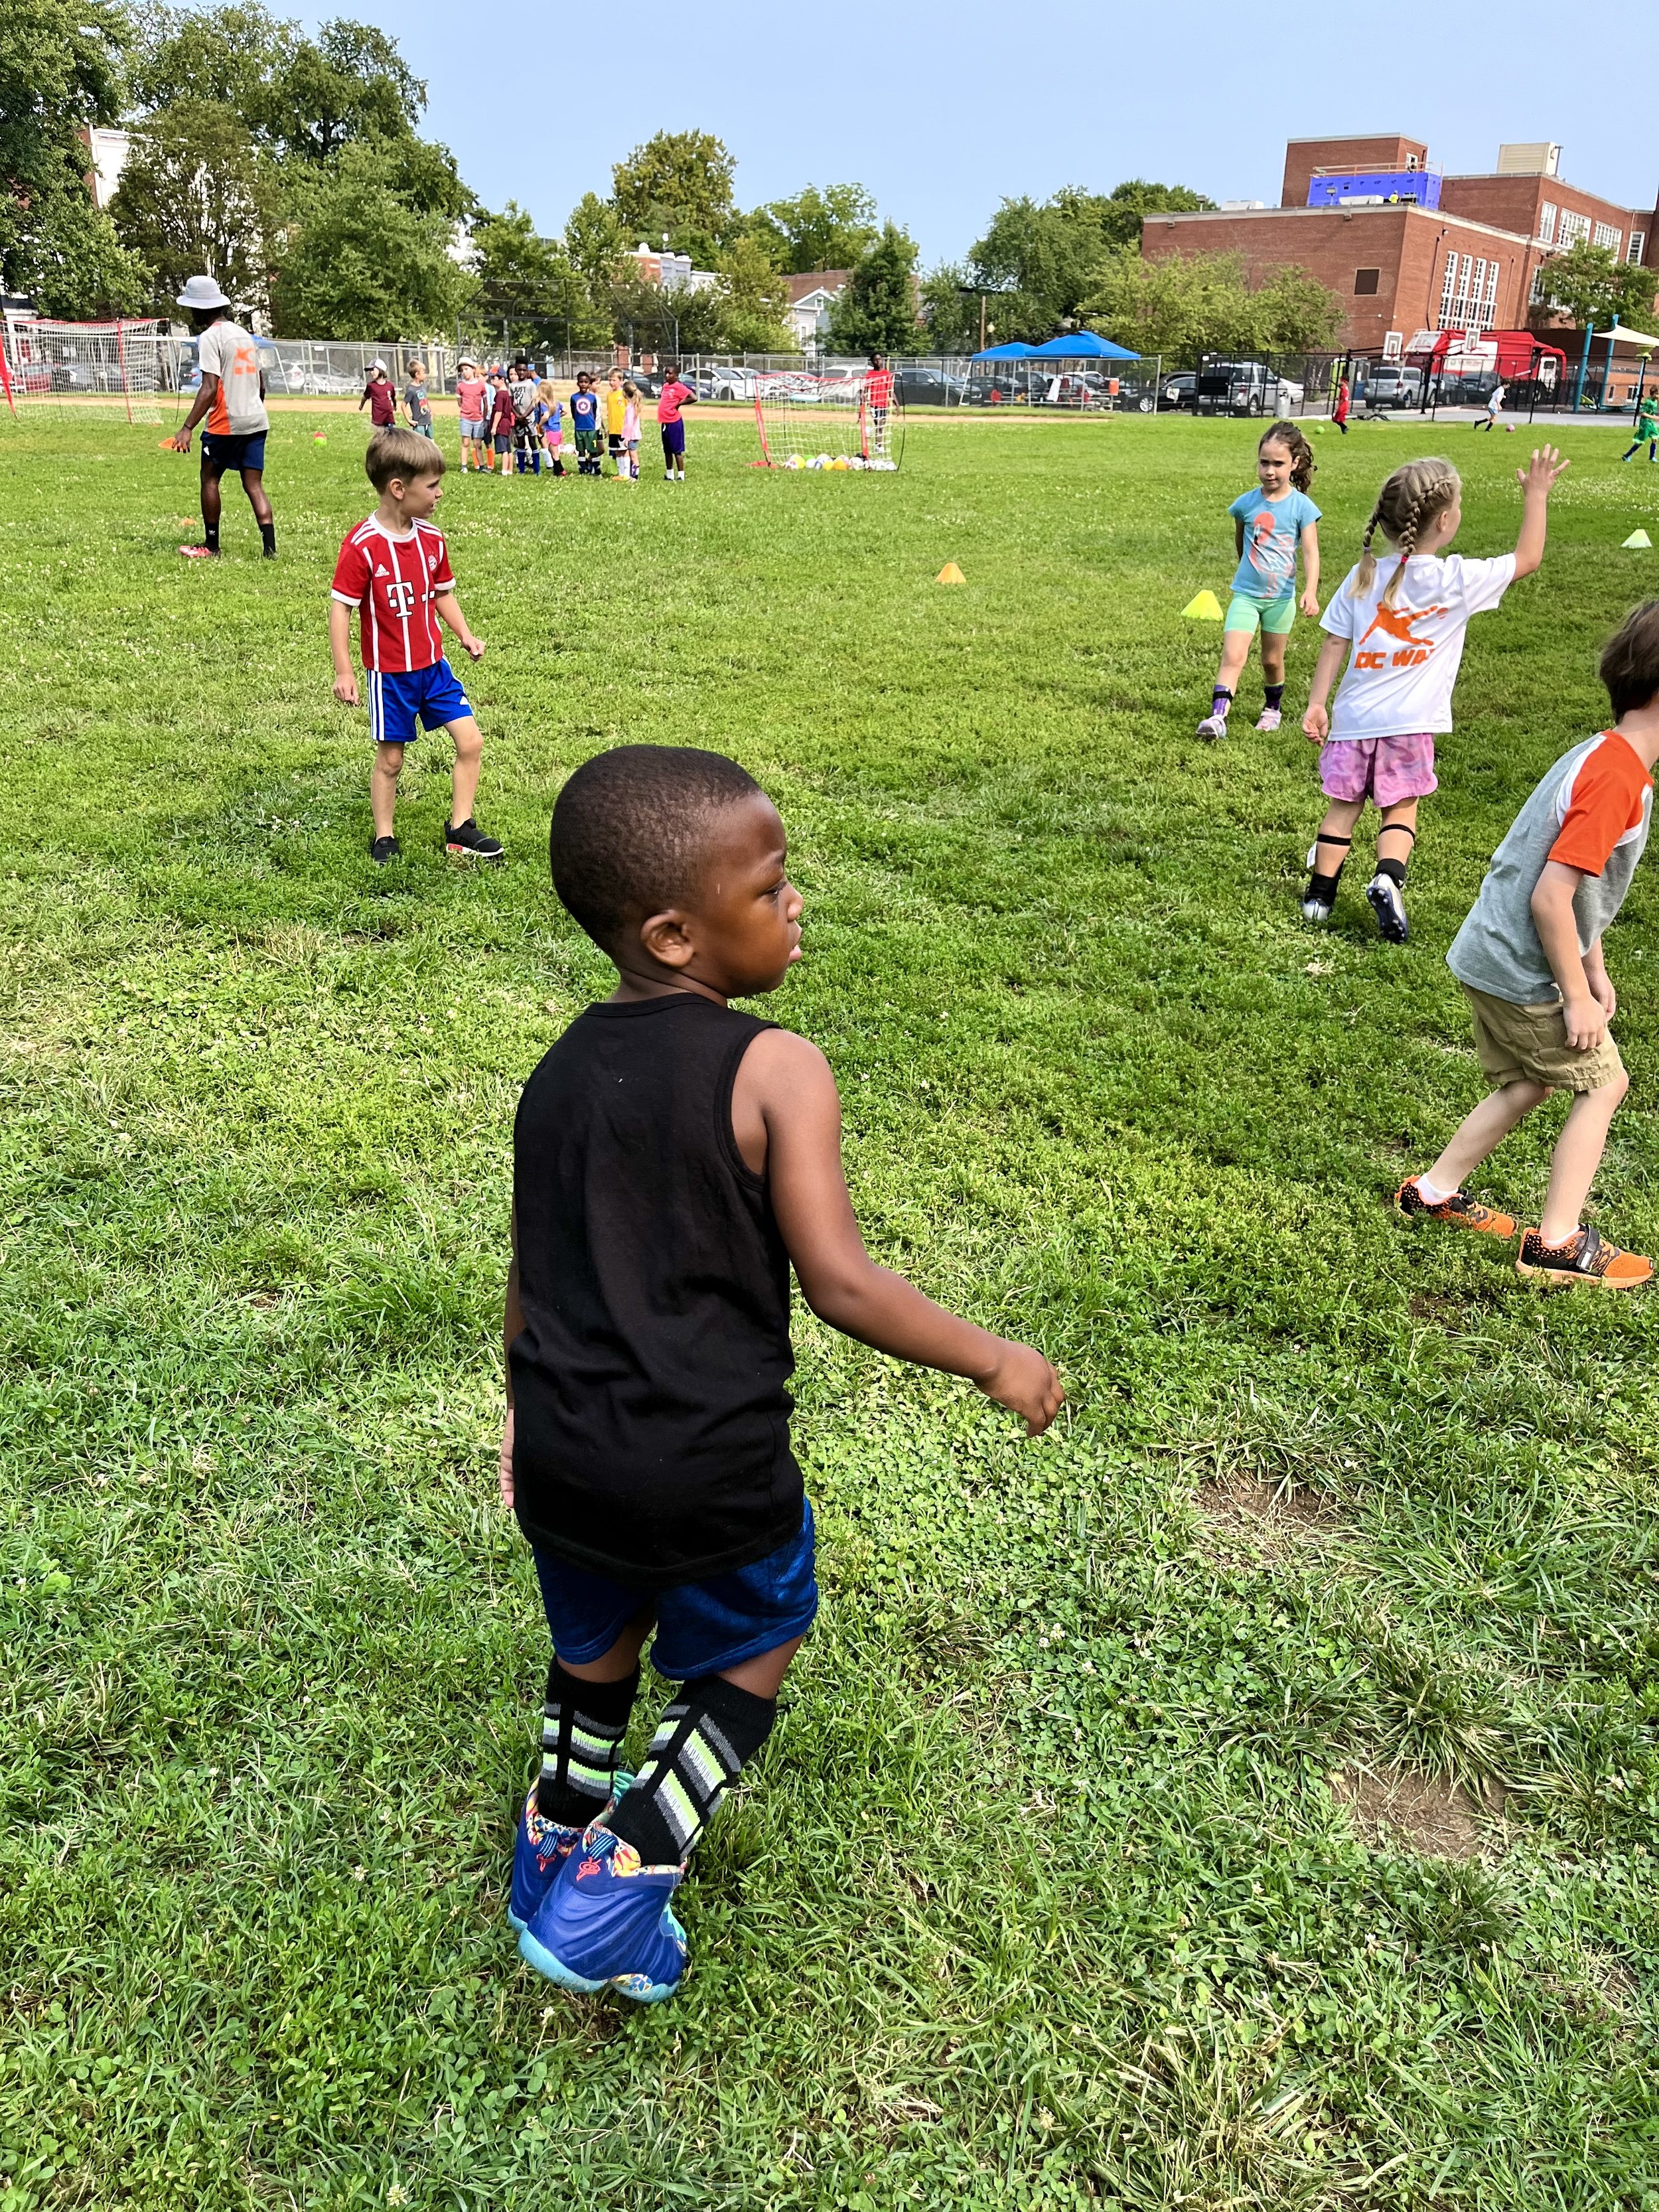 Dc-way-soccer-club-for-kids-in-washington-dc-summer-camp-at-tyler-elementary-school- 9015.jpeg